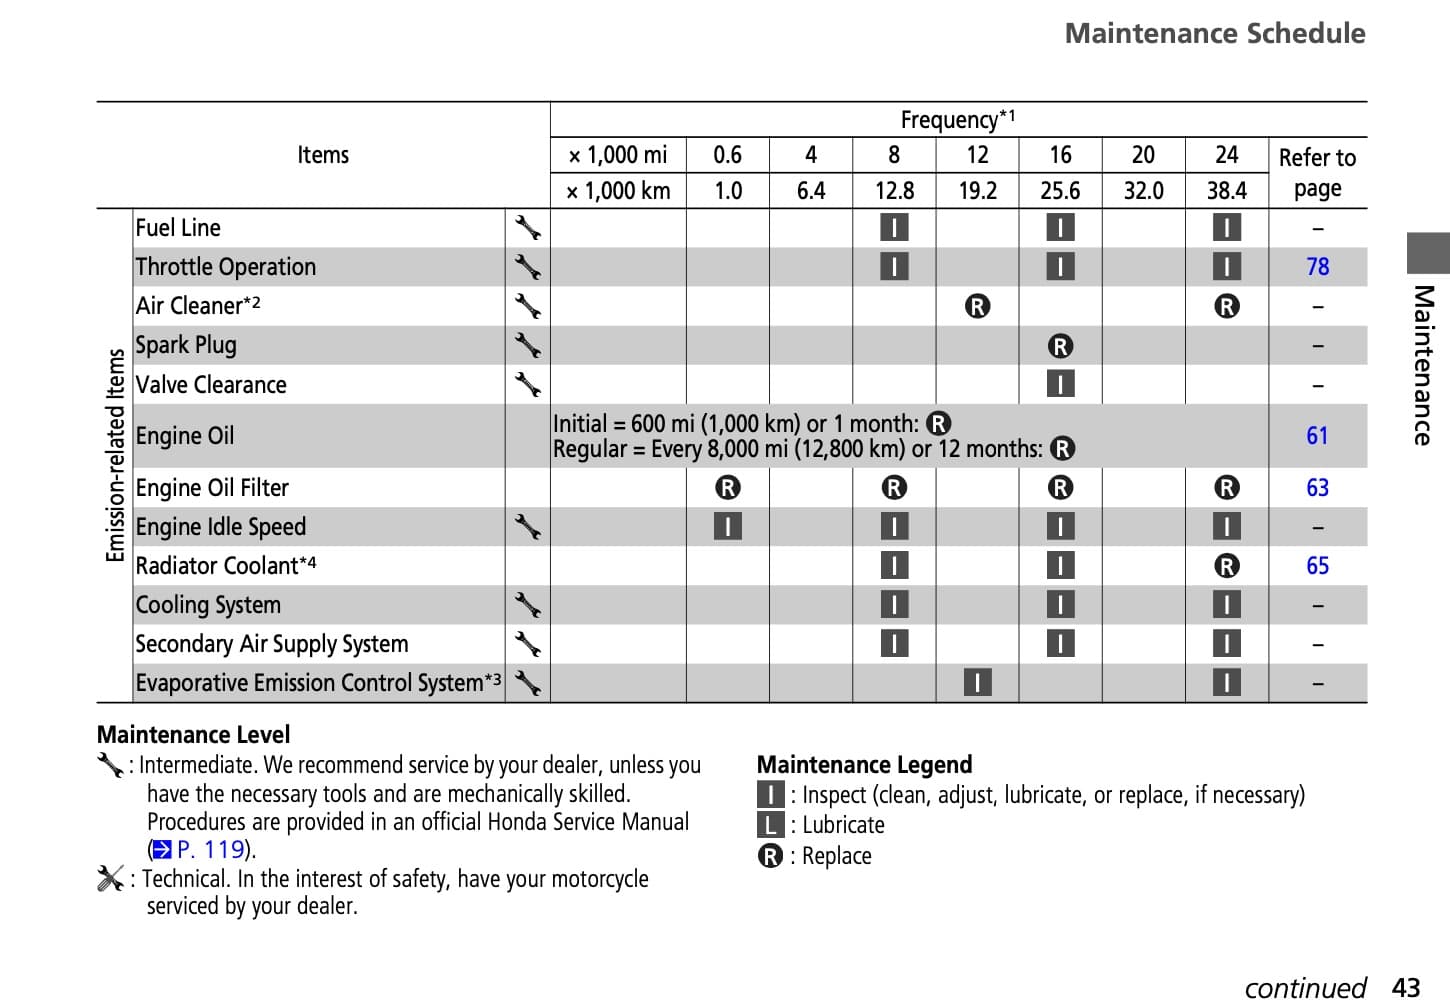 2014 Honda CBR650F maintenance schedule screenshot